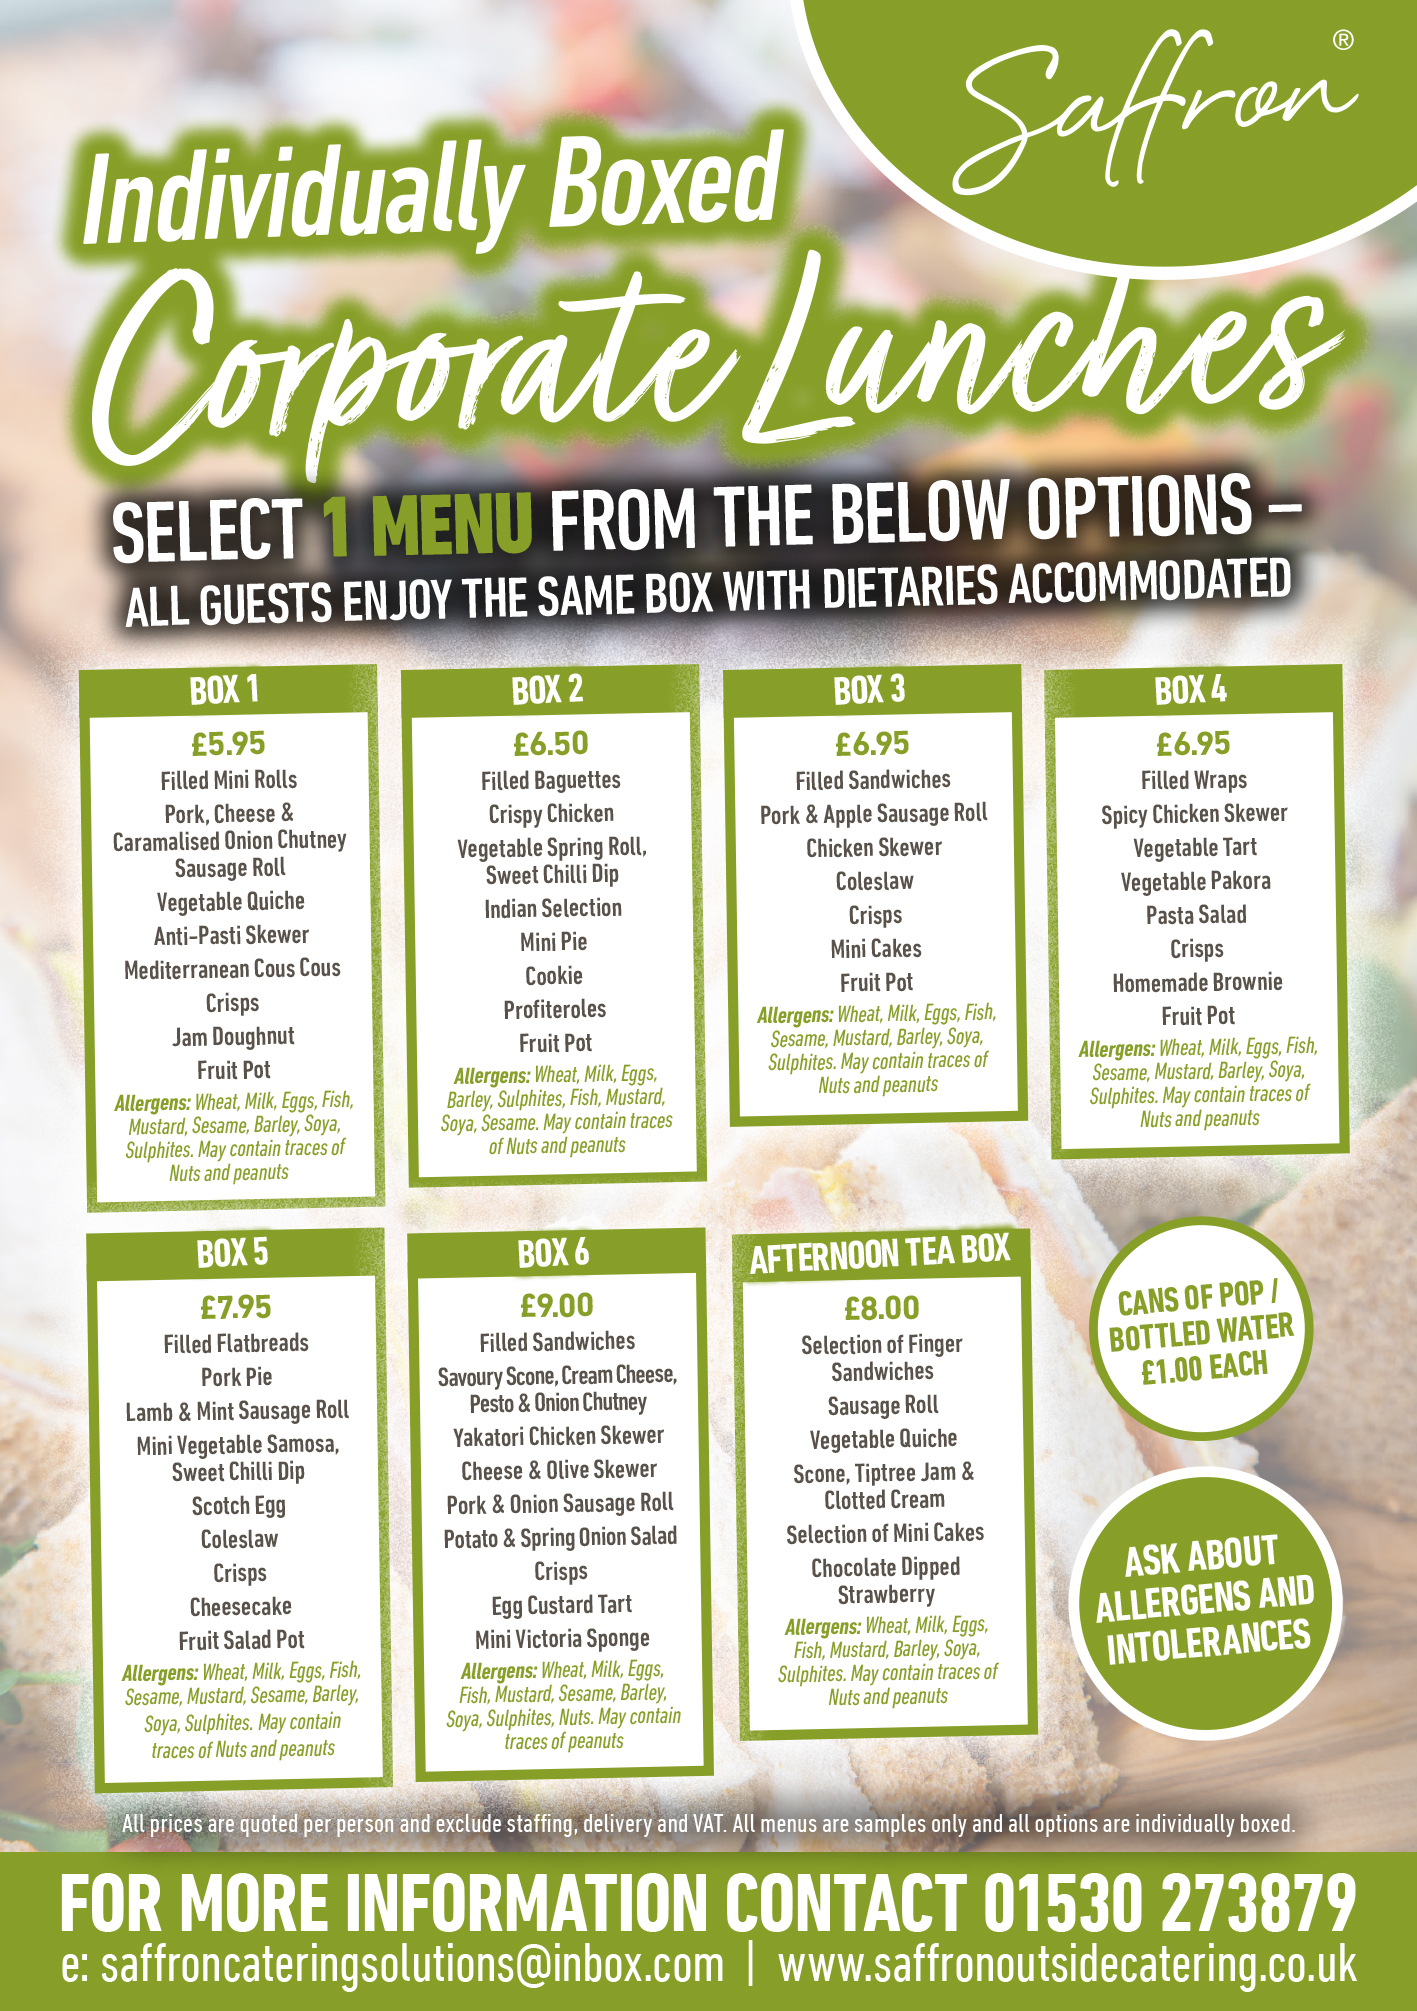 Saffron Corporate Menus Flyer Nov 21 - Corporate Lunches